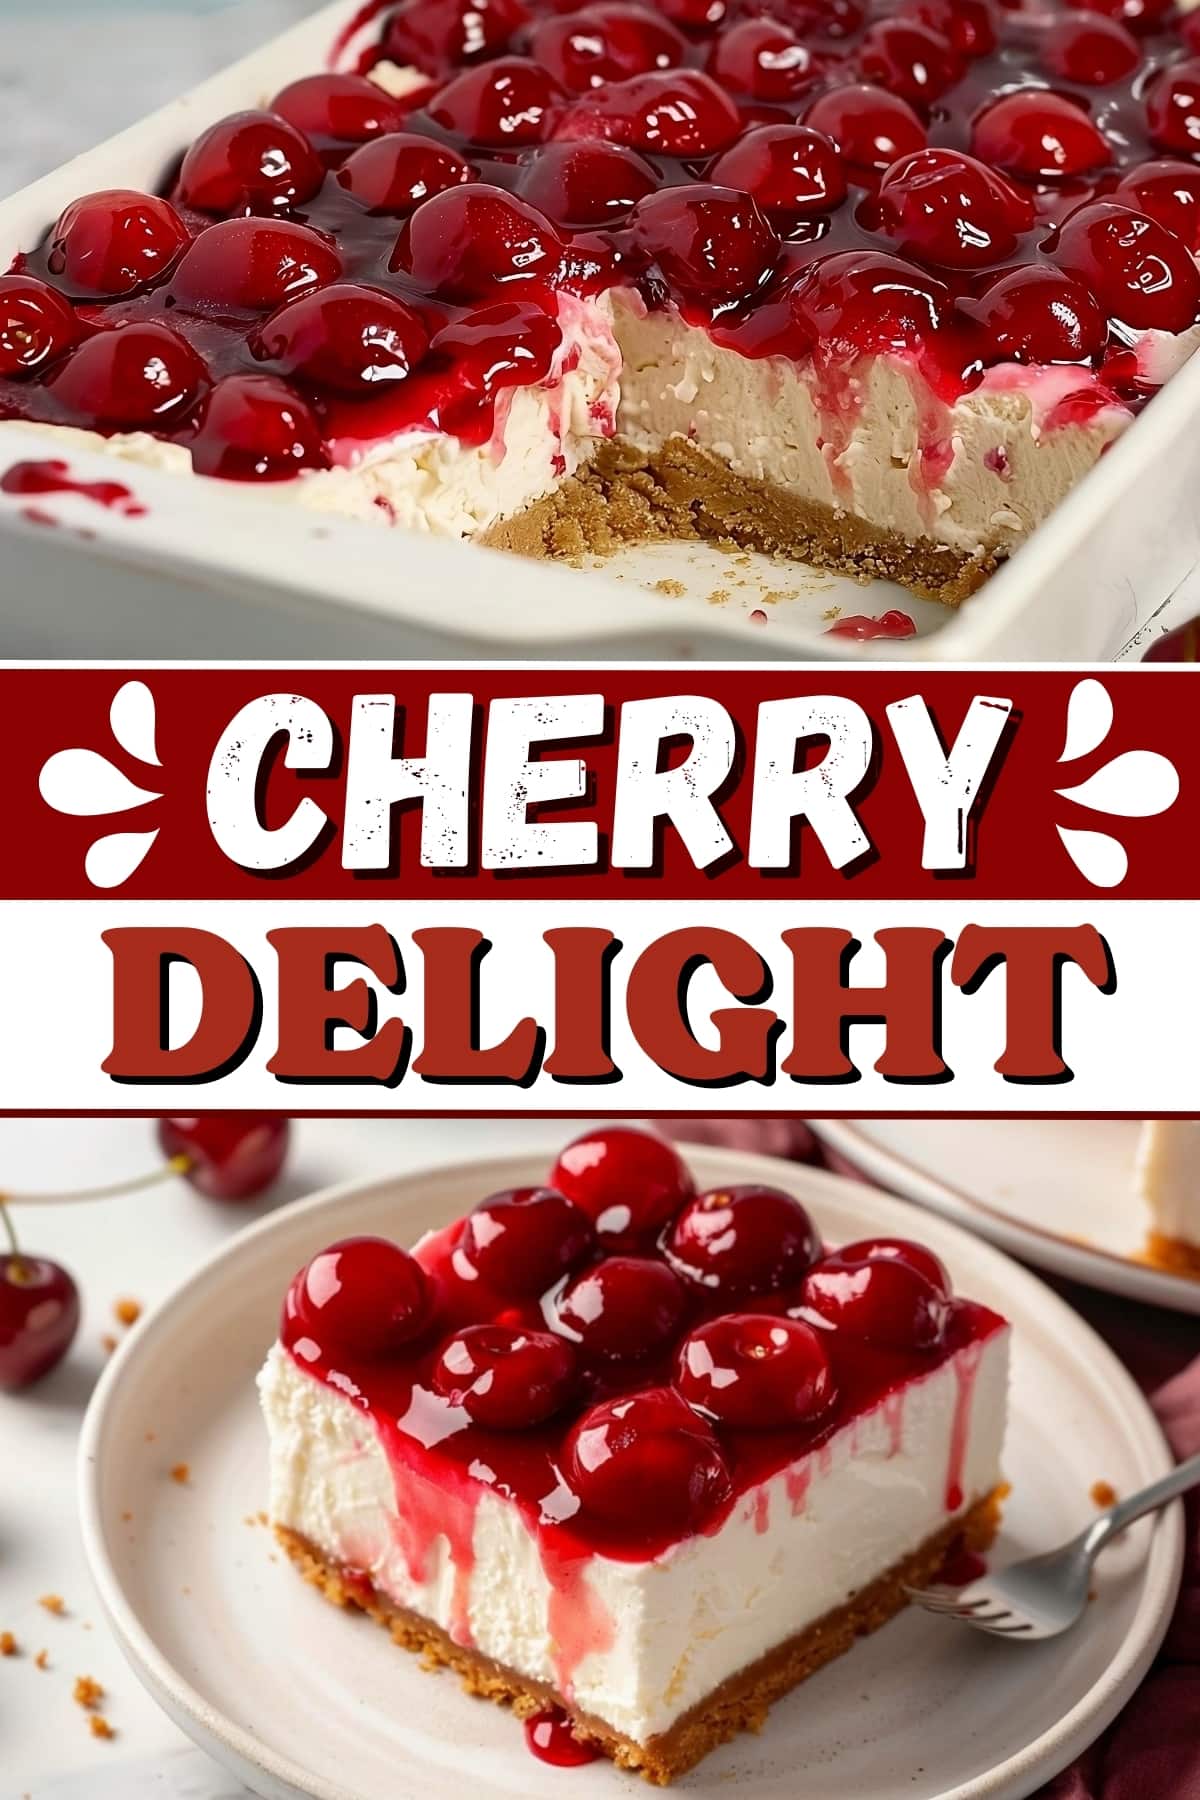 Cherry delight dessert recipe